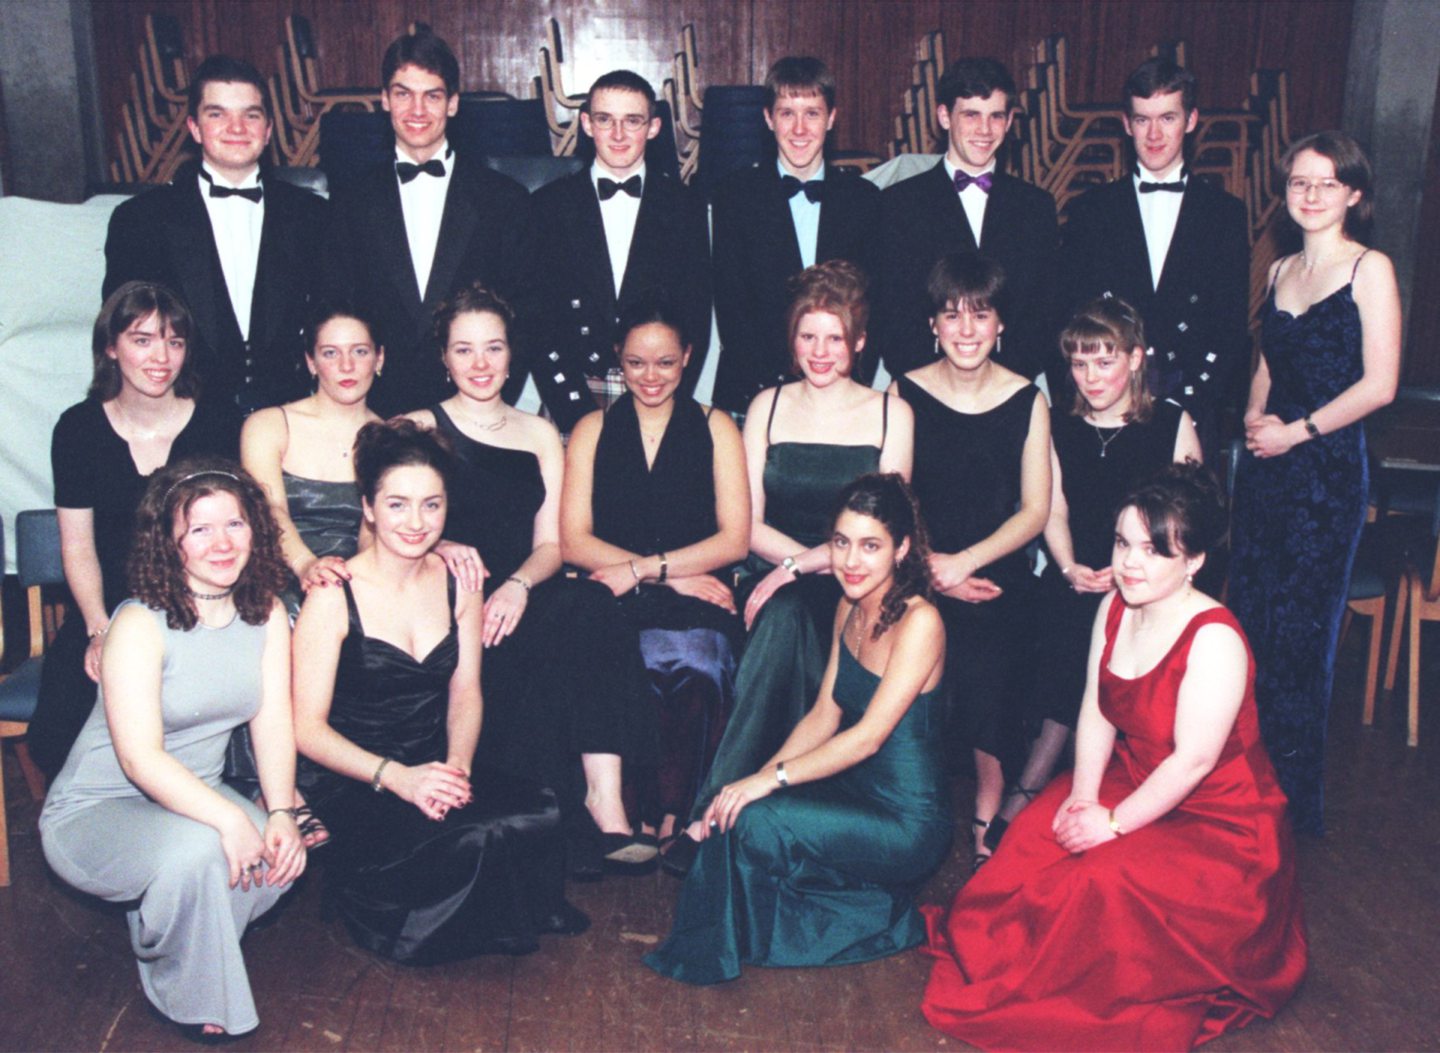 Aberdeen Grammar School leavers held their ball in the school in March 1999.